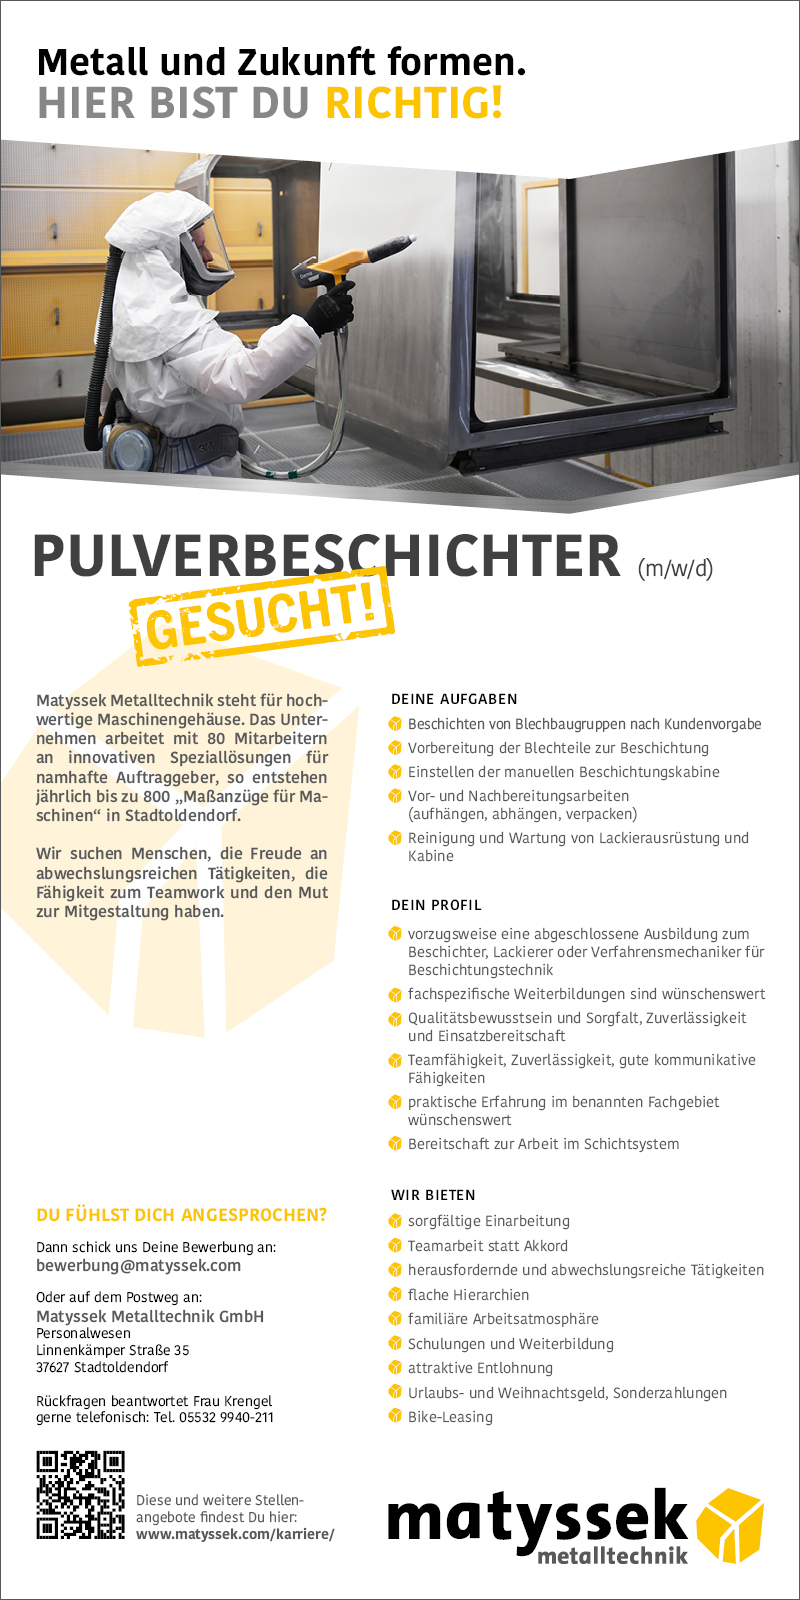 Pulverbeschichter (m/w/d) - Matyssek Metalltechnik GmbH